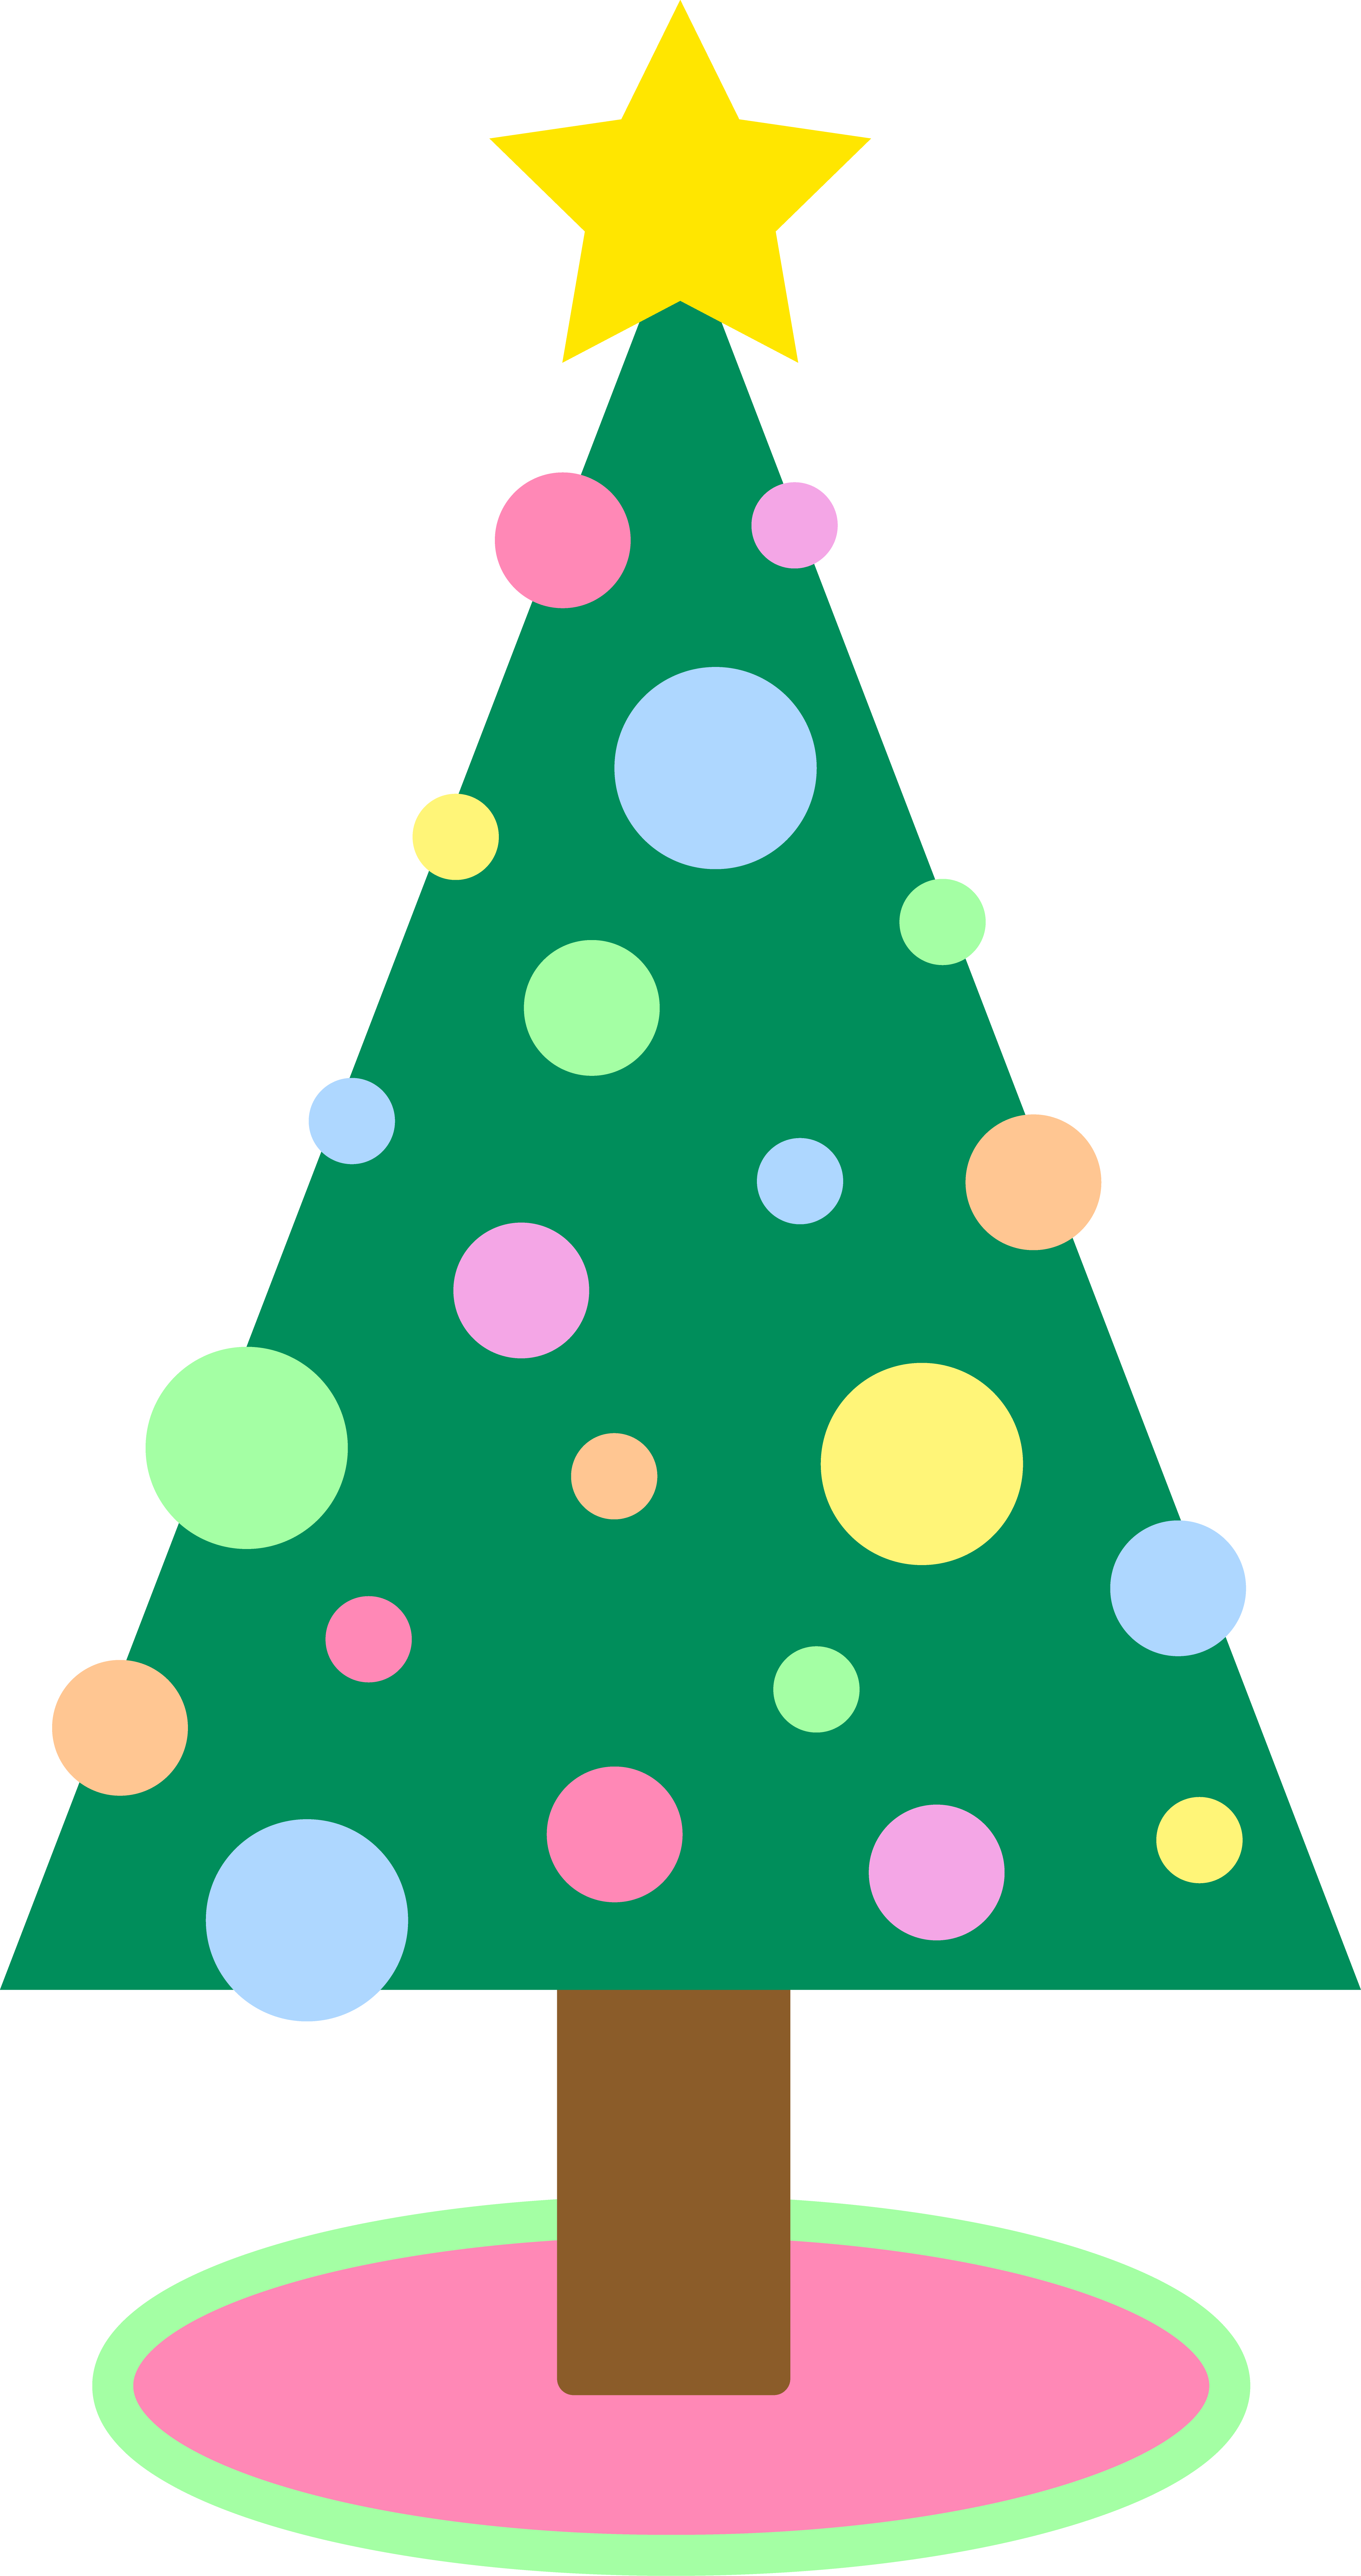 Free Christmas Tree Pics Free, Download Free Christmas Tree Pics Free